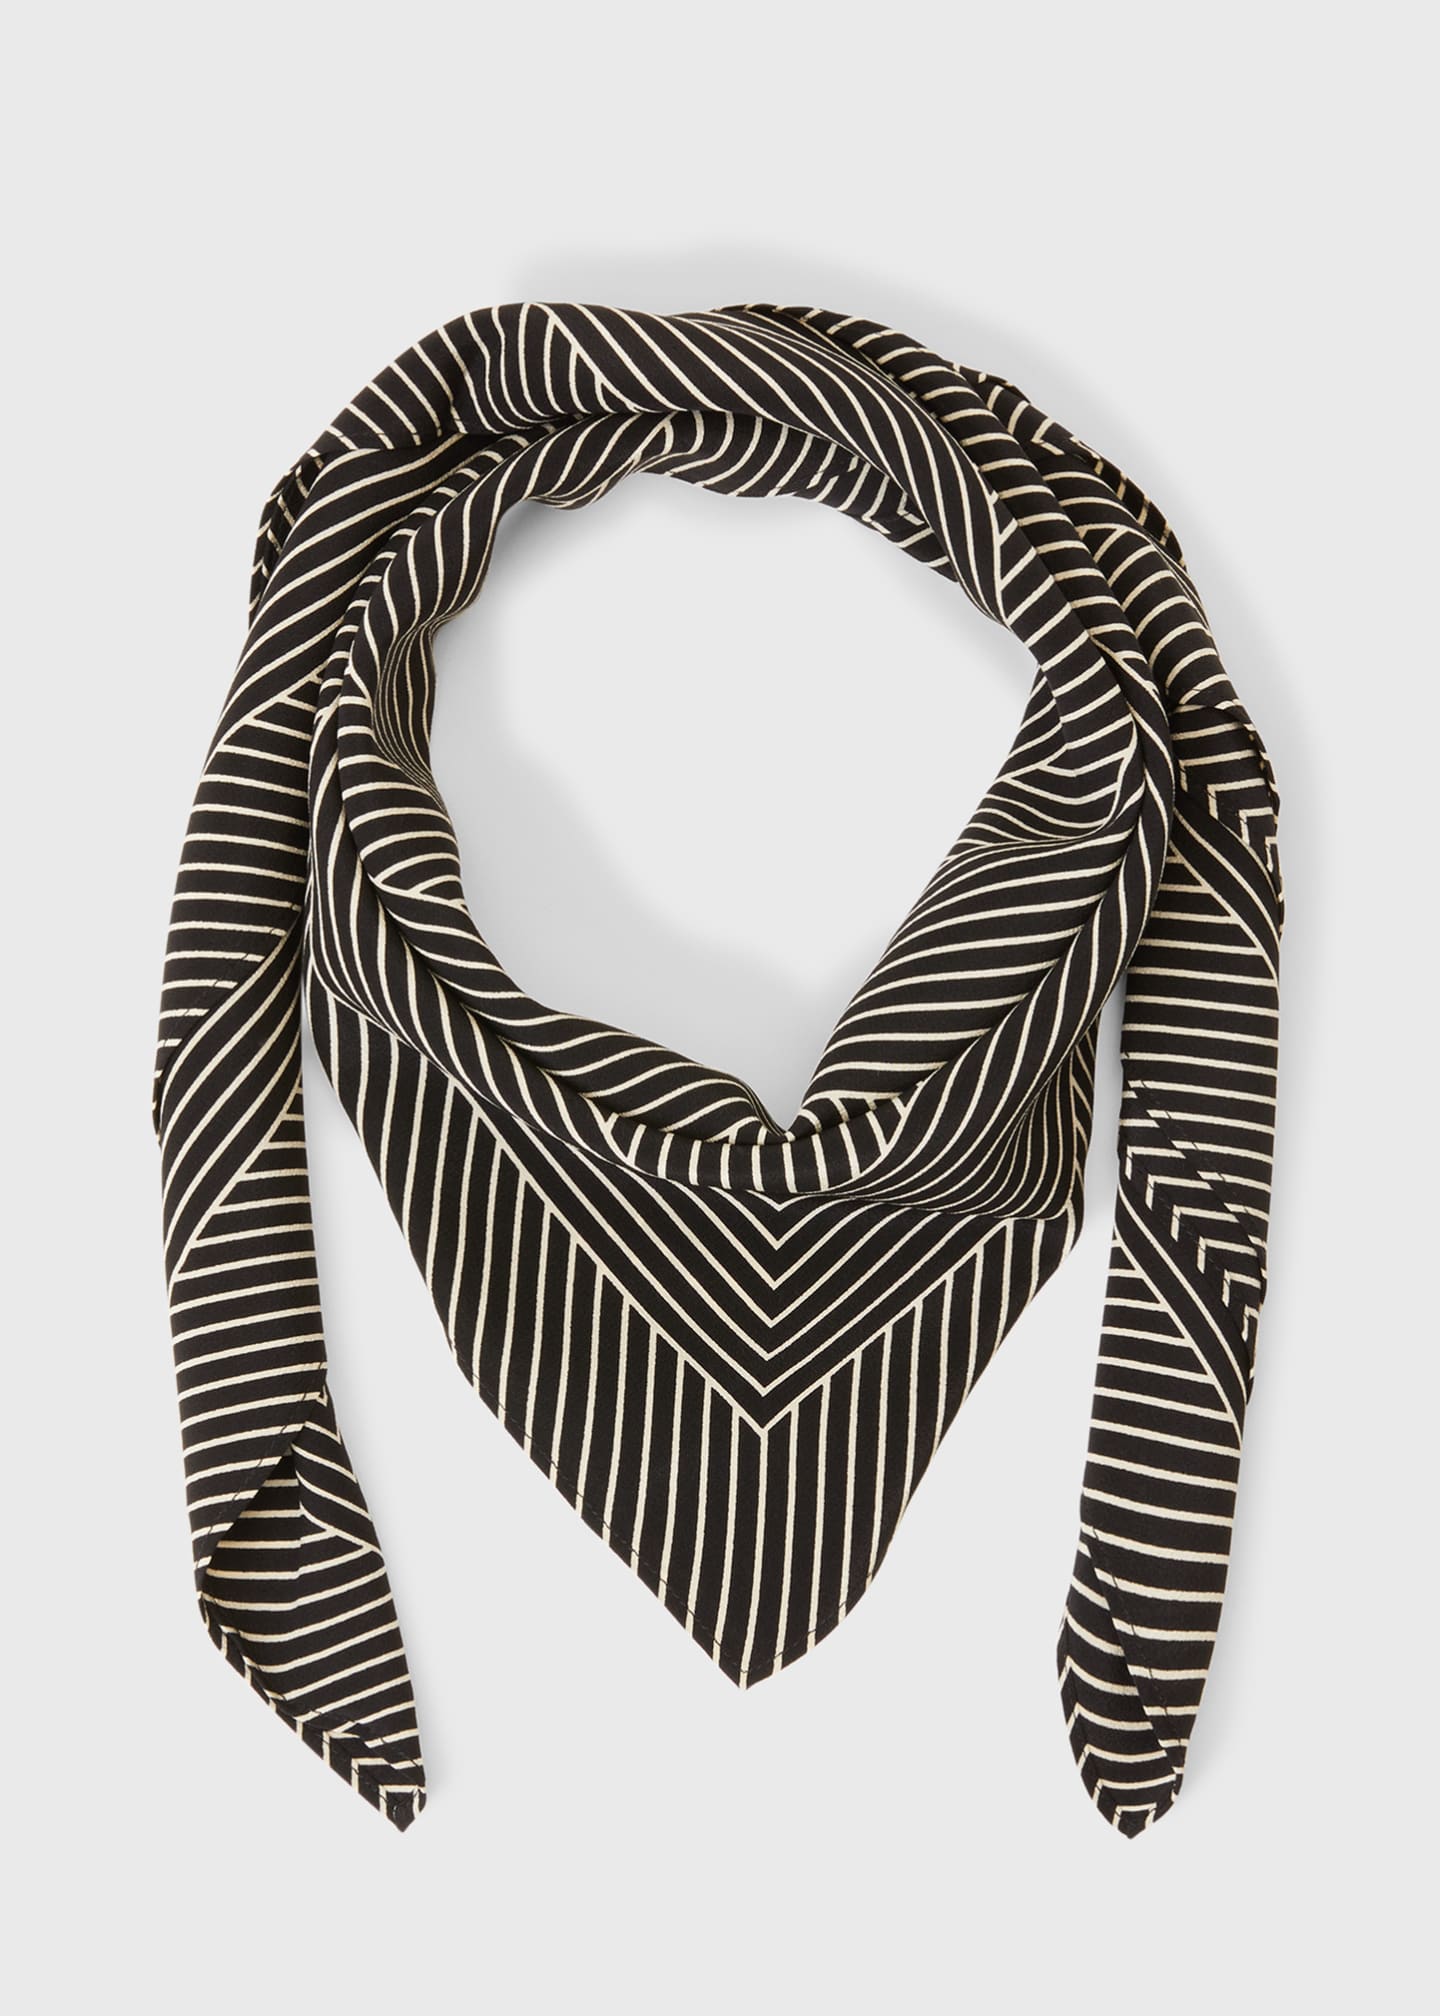 Monogram silk scarf by Toteme